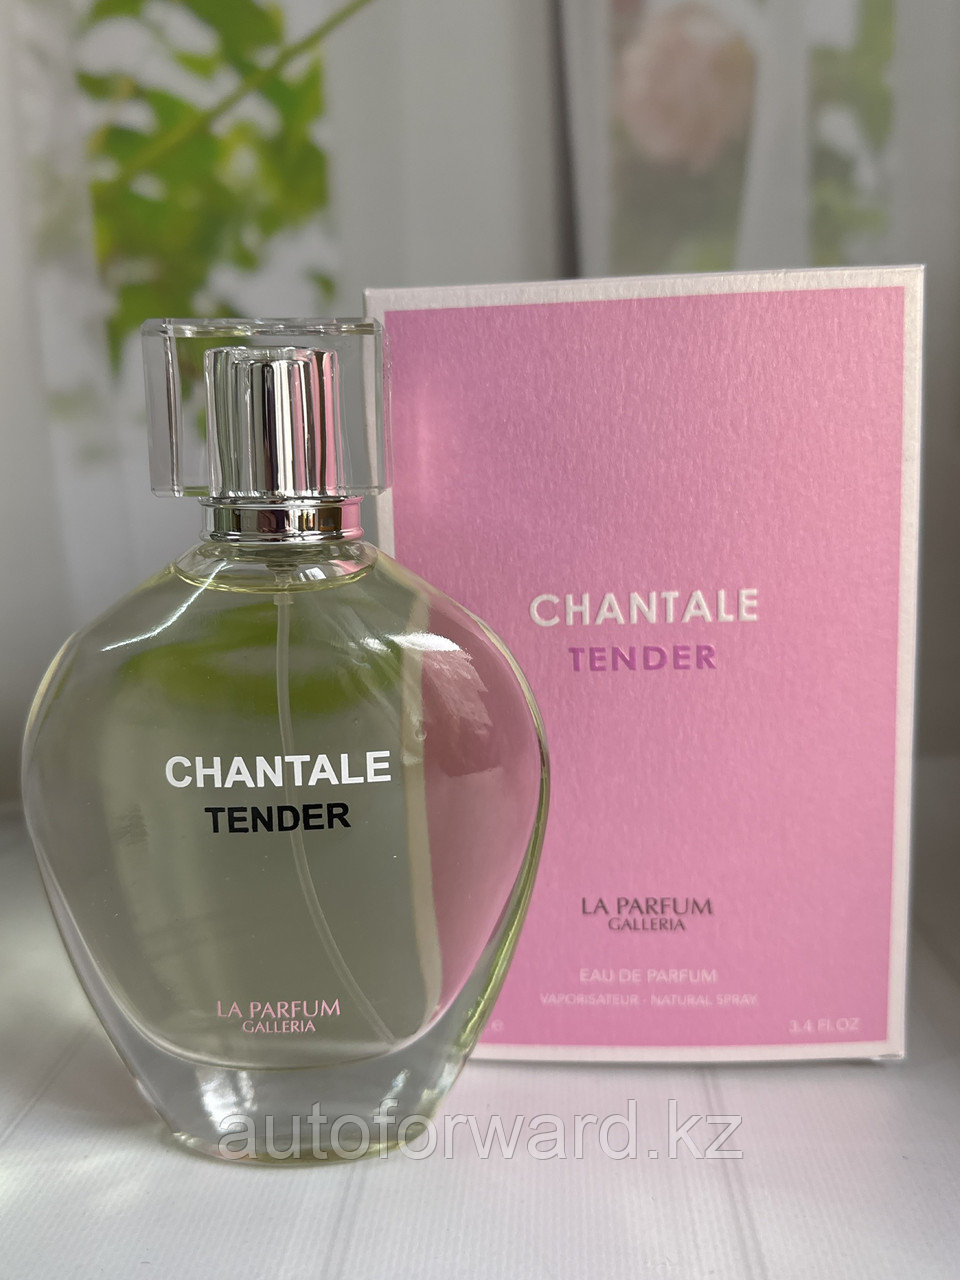 ОАЭ Парфюм CHANTALE TENDER La Parfum Galleria, фото 1